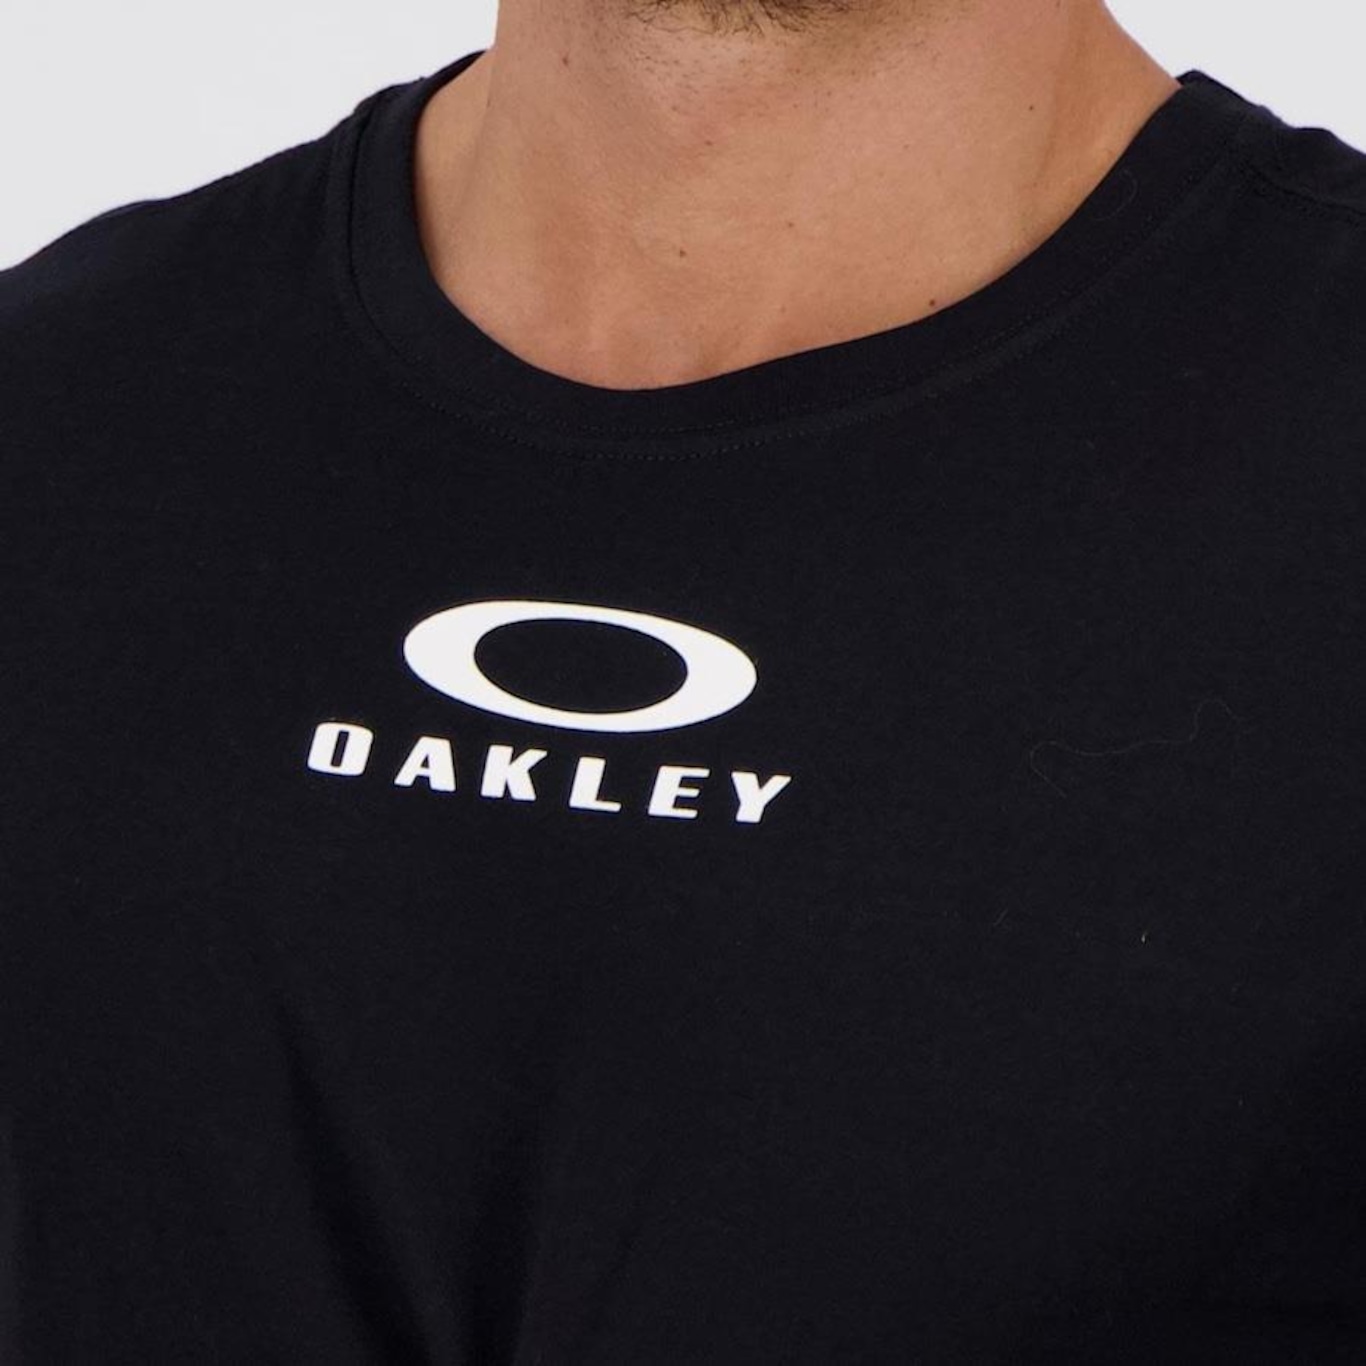 Camiseta Oakley Bark New Tee Branco